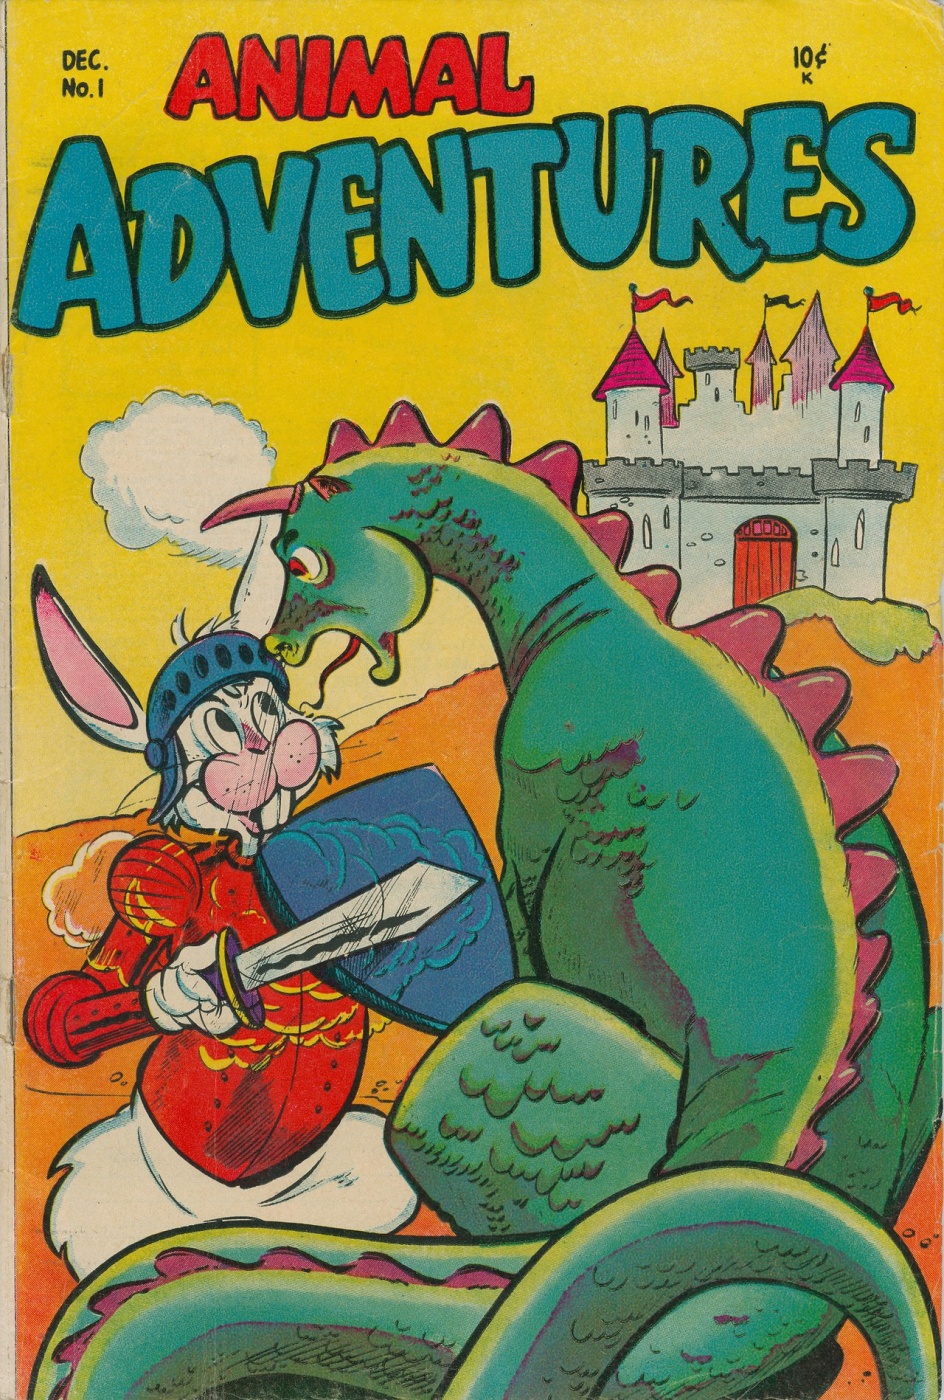 Comic Strips: Animal Adventures #1